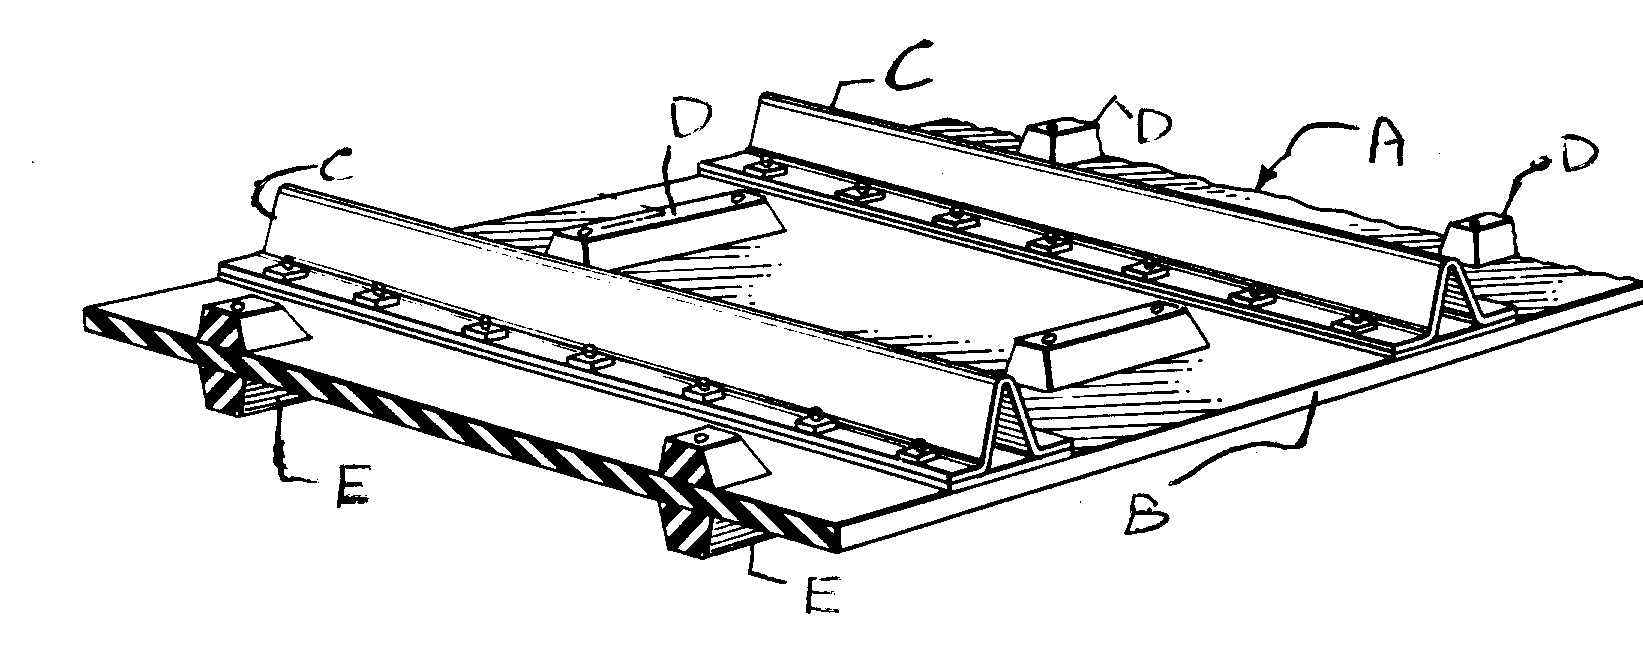 A - Flexible track; B - Reinforced rubber belt; C - Transversegrouser (removable); D - Skid contraction lug; E - Drive lugs
